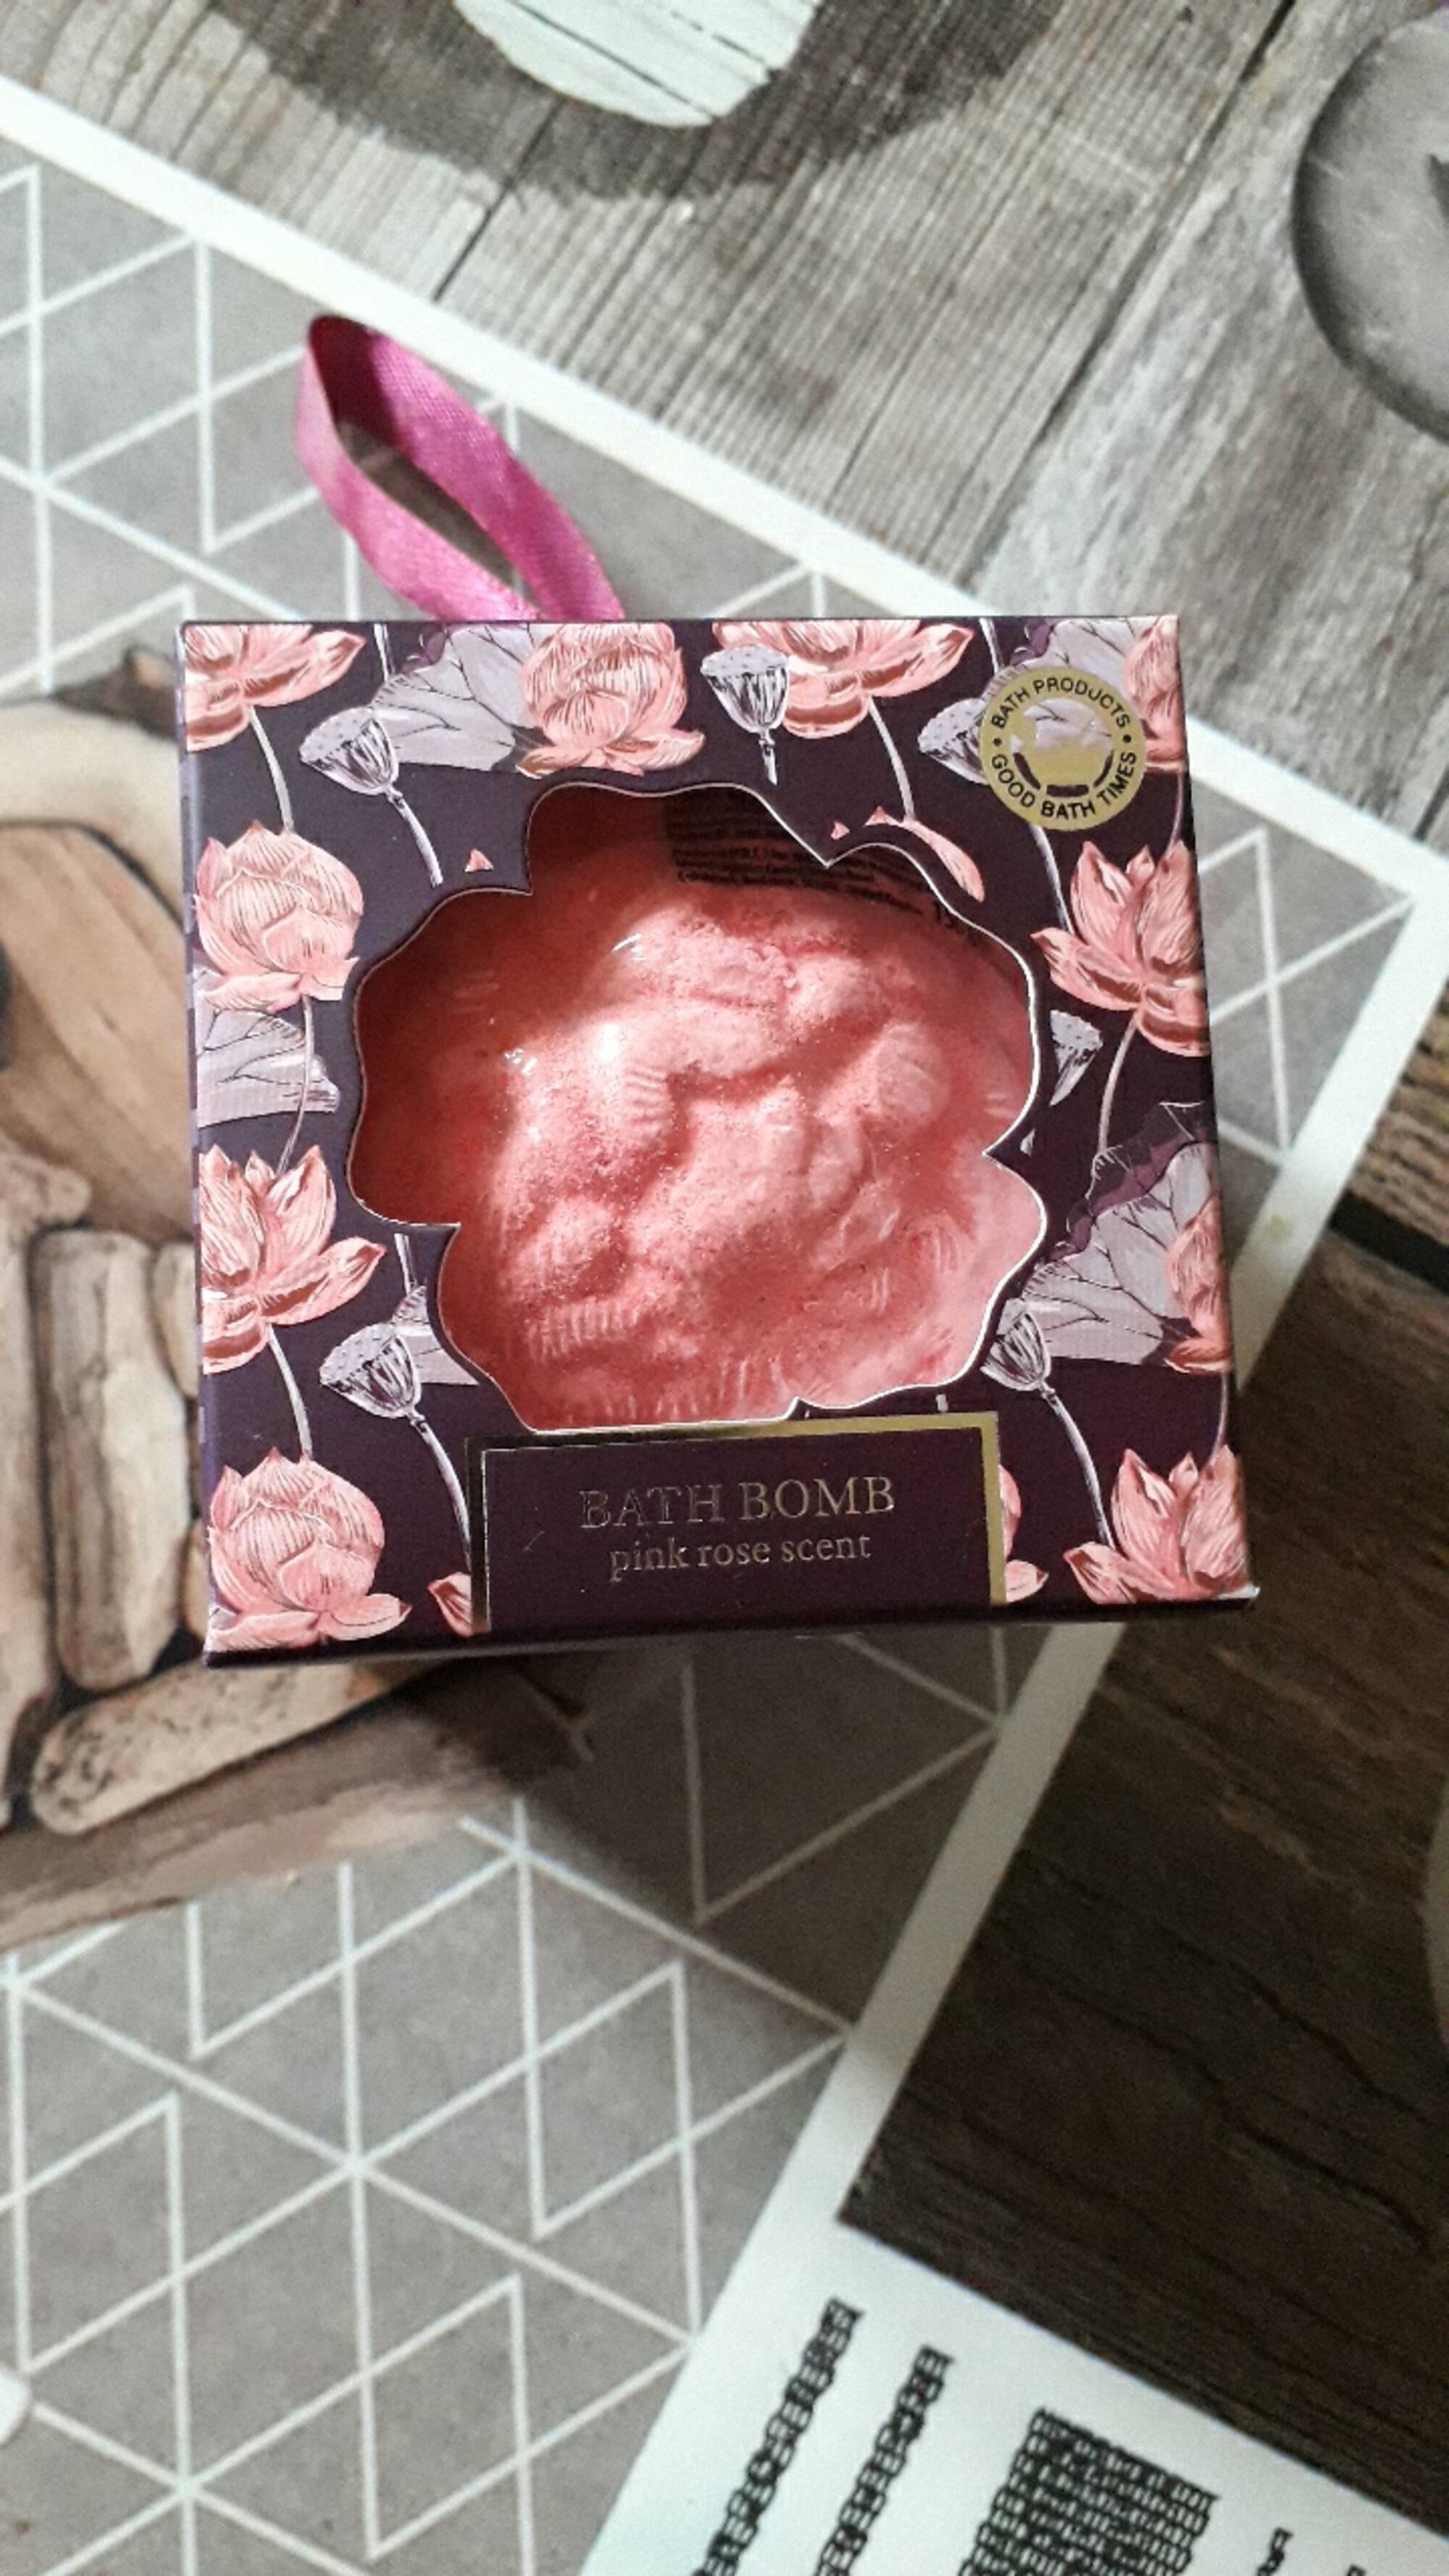 ZEEMAN - Bath bomb pink rose scent